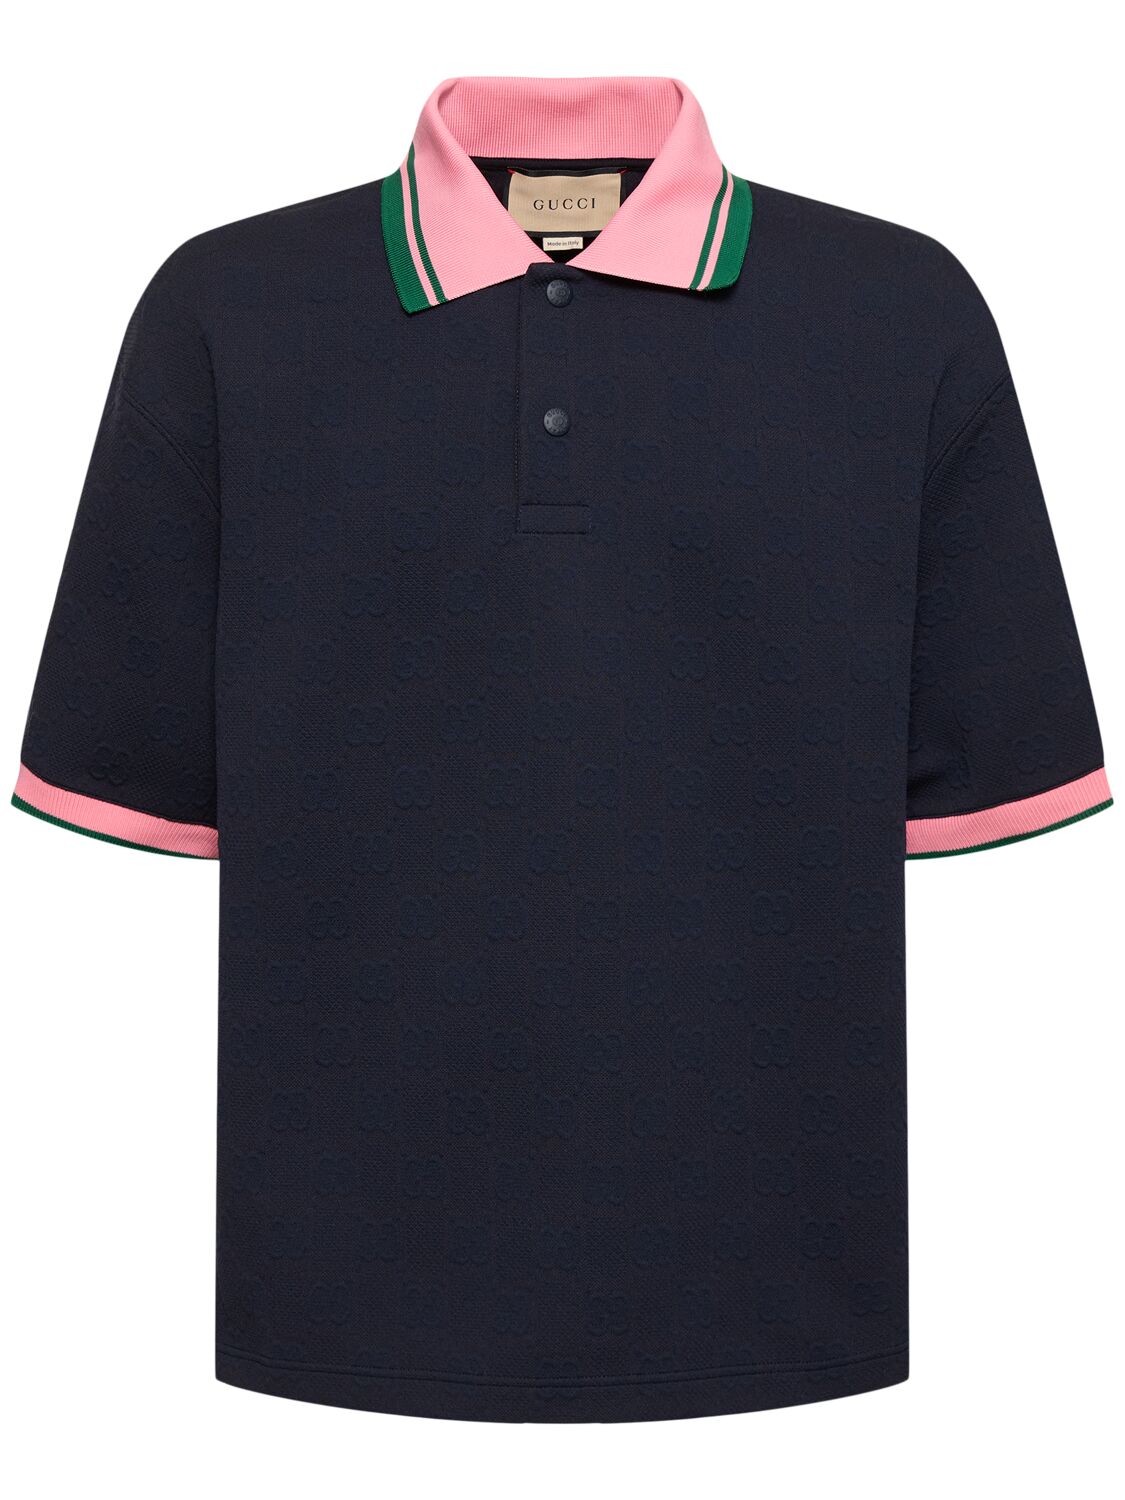 Gg Detail Jacquard Polo Shirt